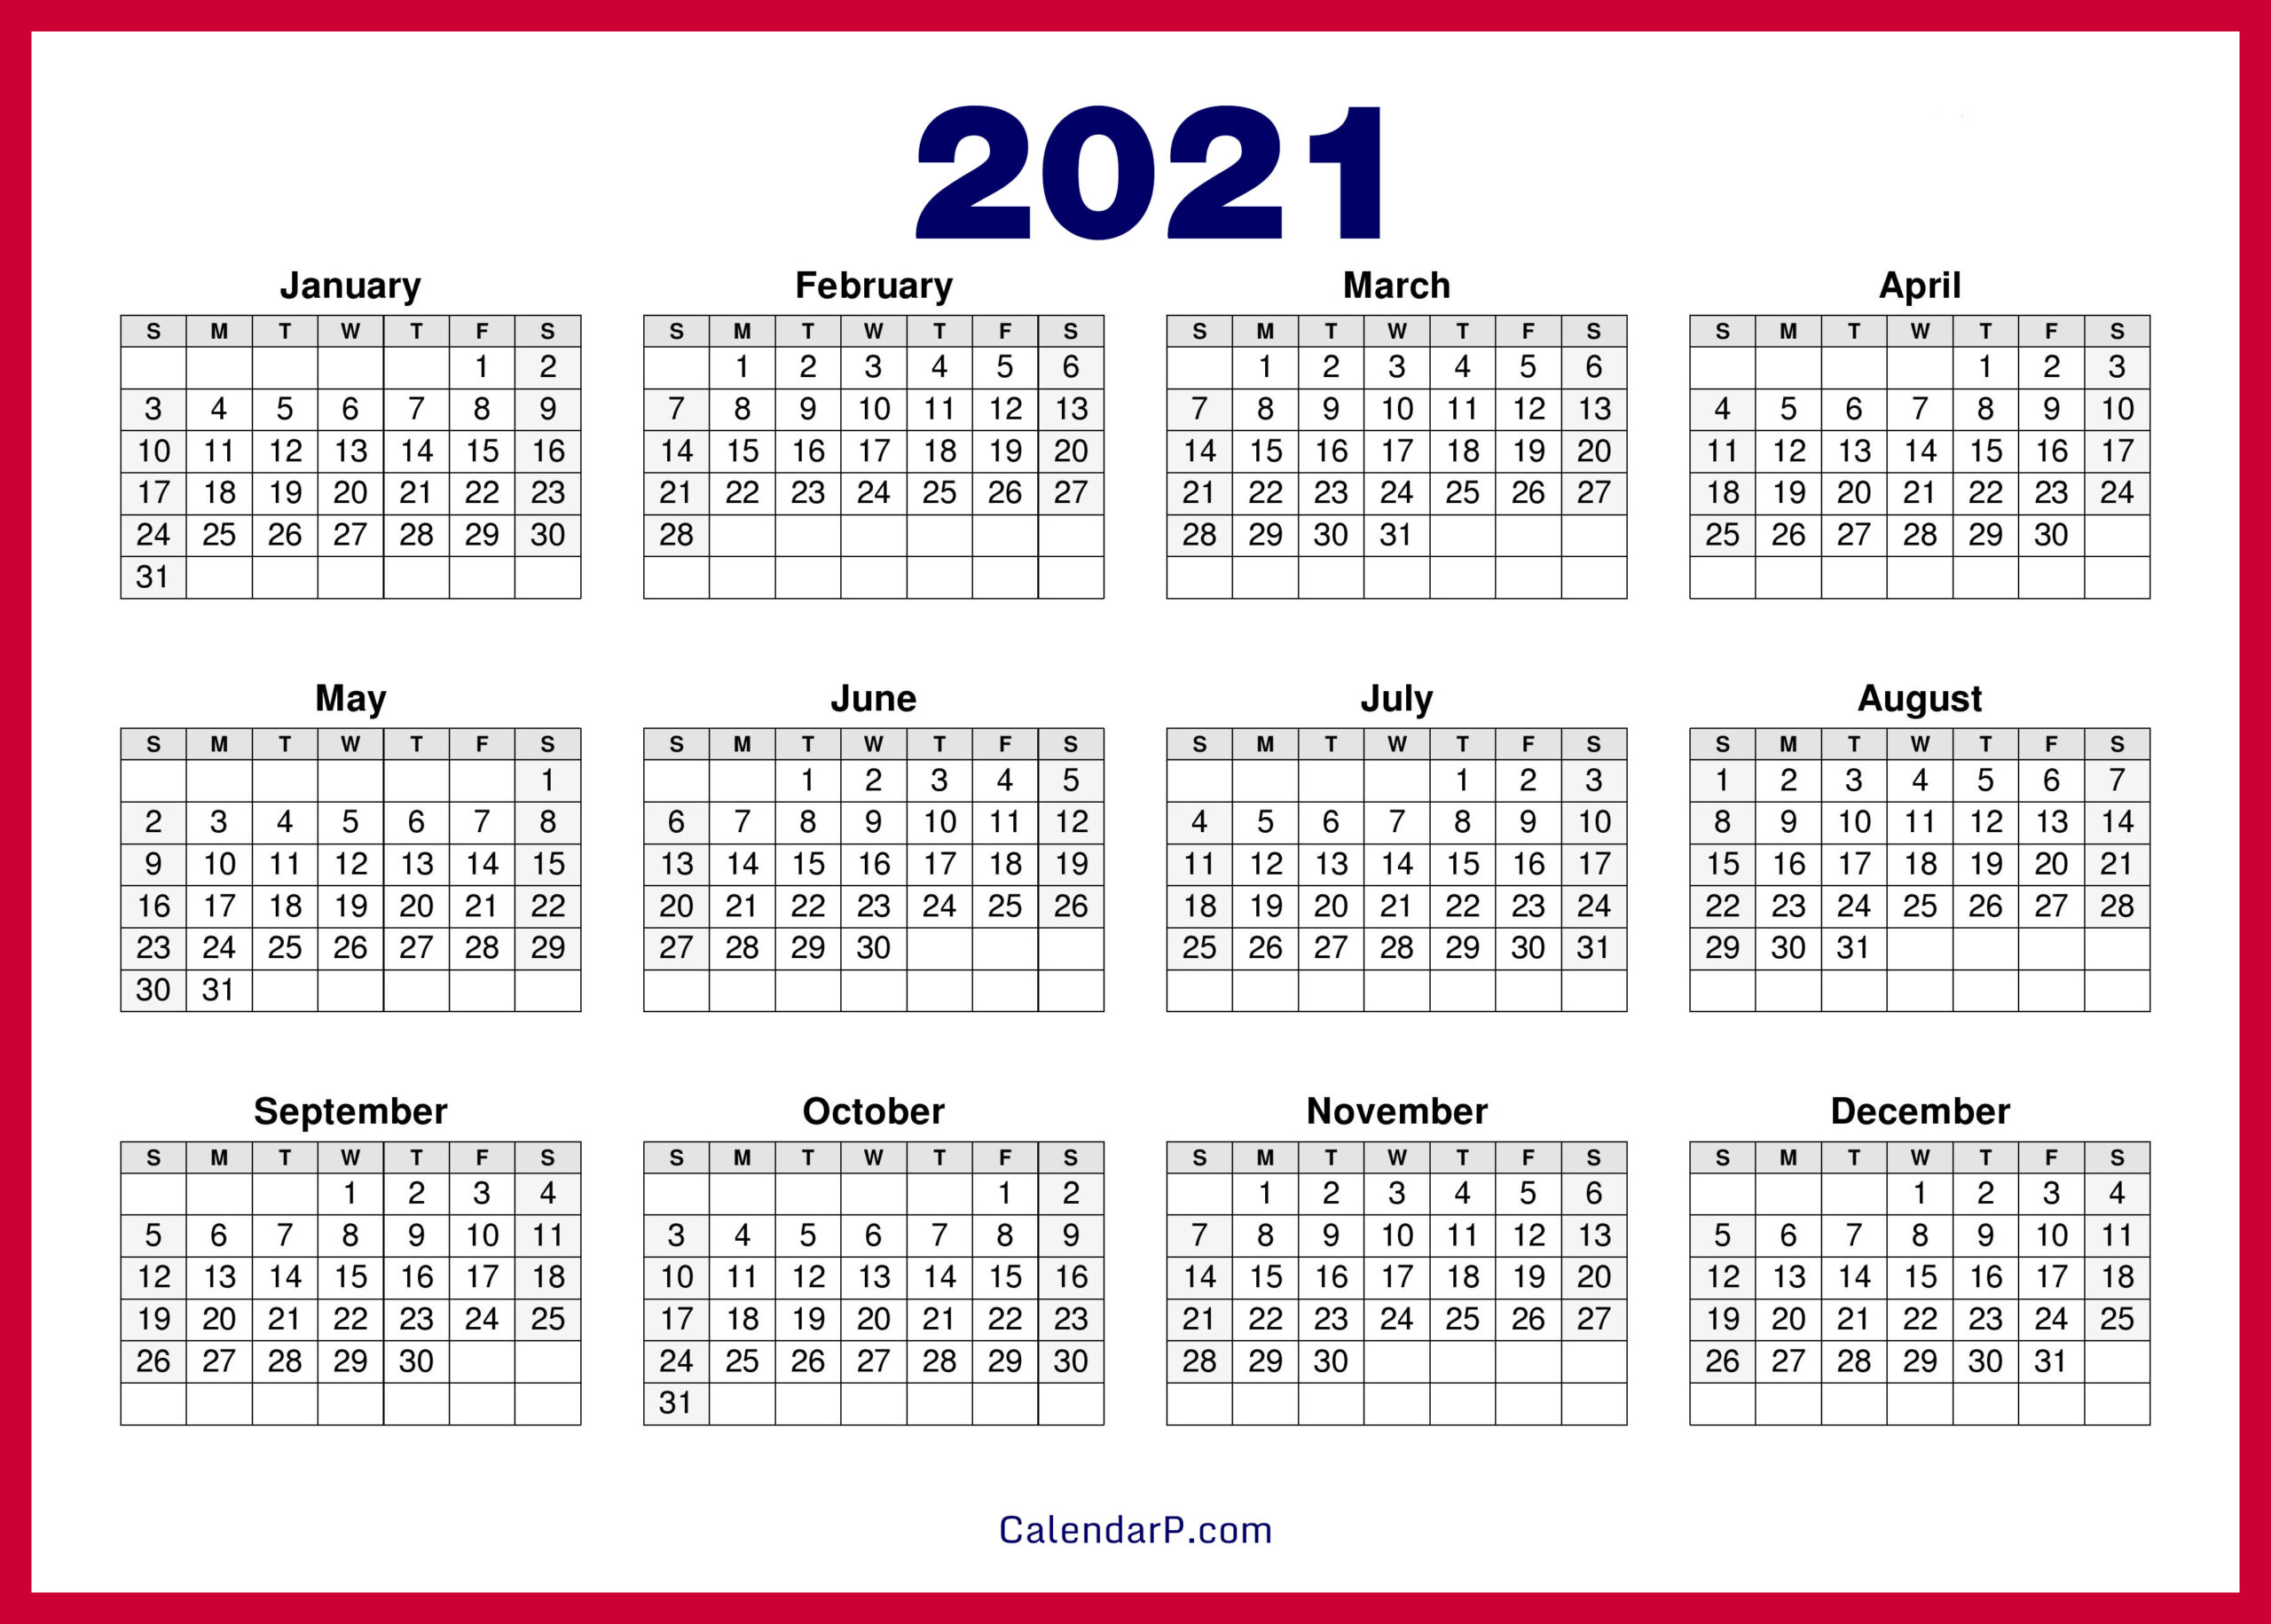 2021 Calendar Printable Free Hd - Red - Calendarp